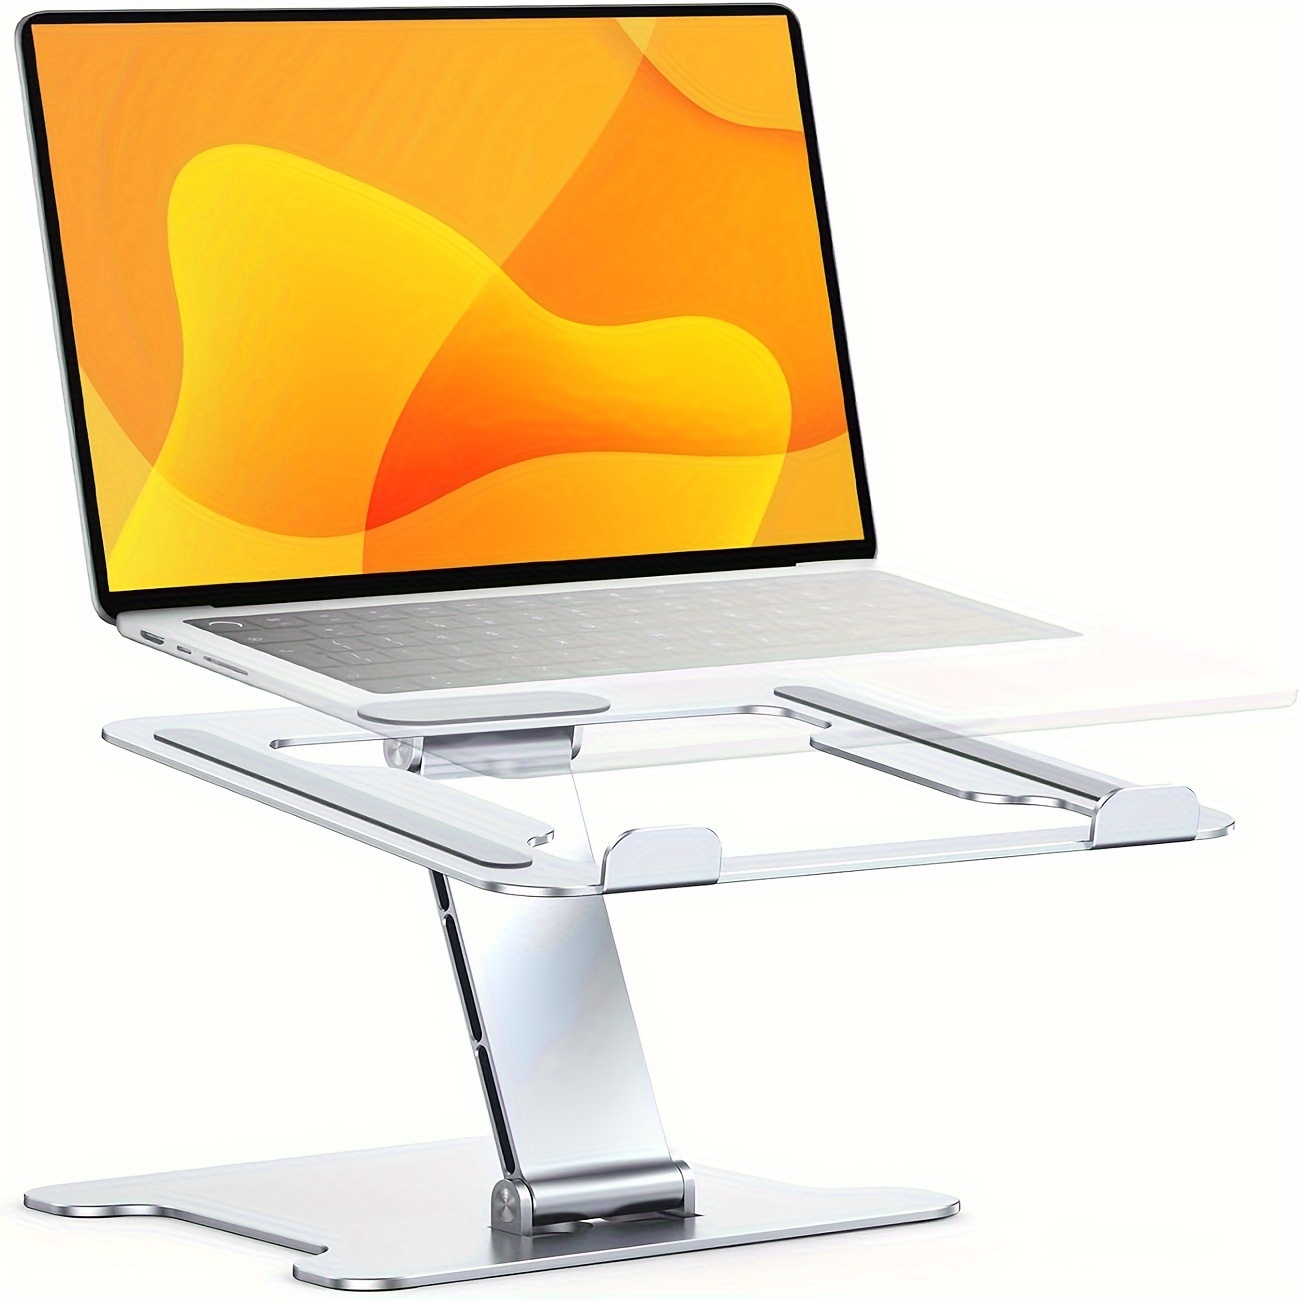 Soporte para computadora portátil para escritorio, soporte ergonómico  ajustable para computadora, elevador portátil para laptop, 6 alturas,  compatible